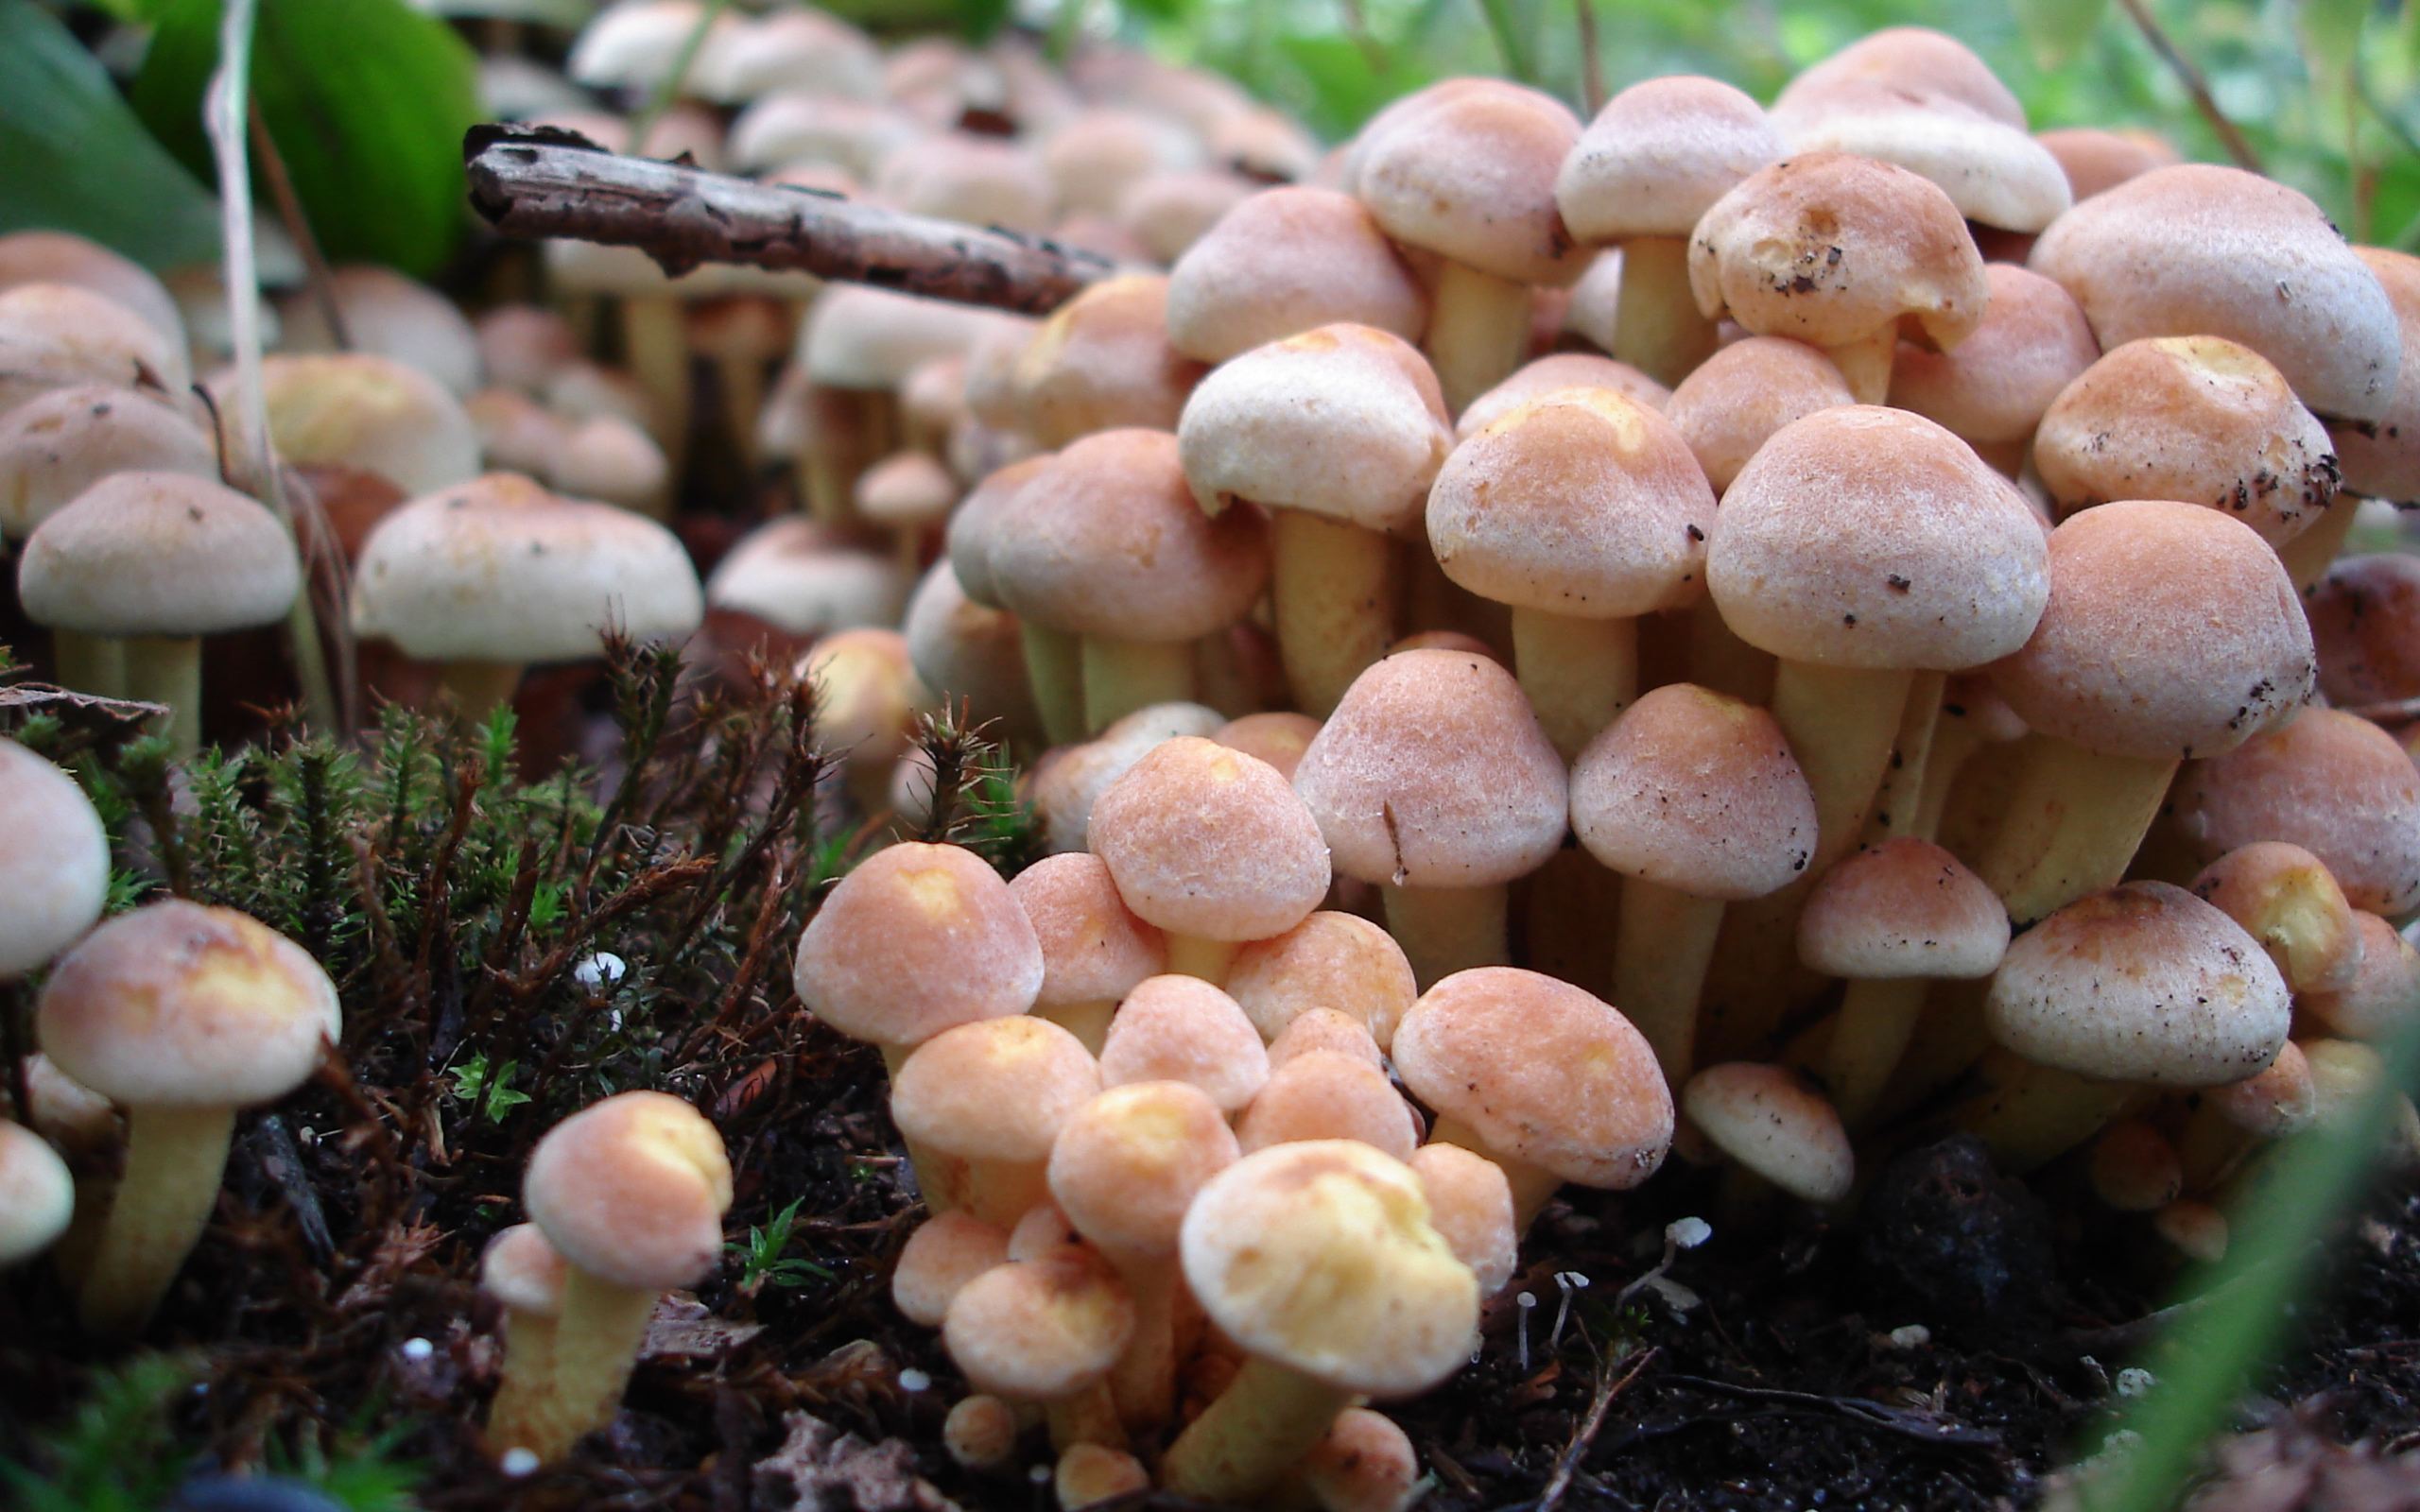 Mushrooms growing in a natural setting, ideal desktop wallpaper.